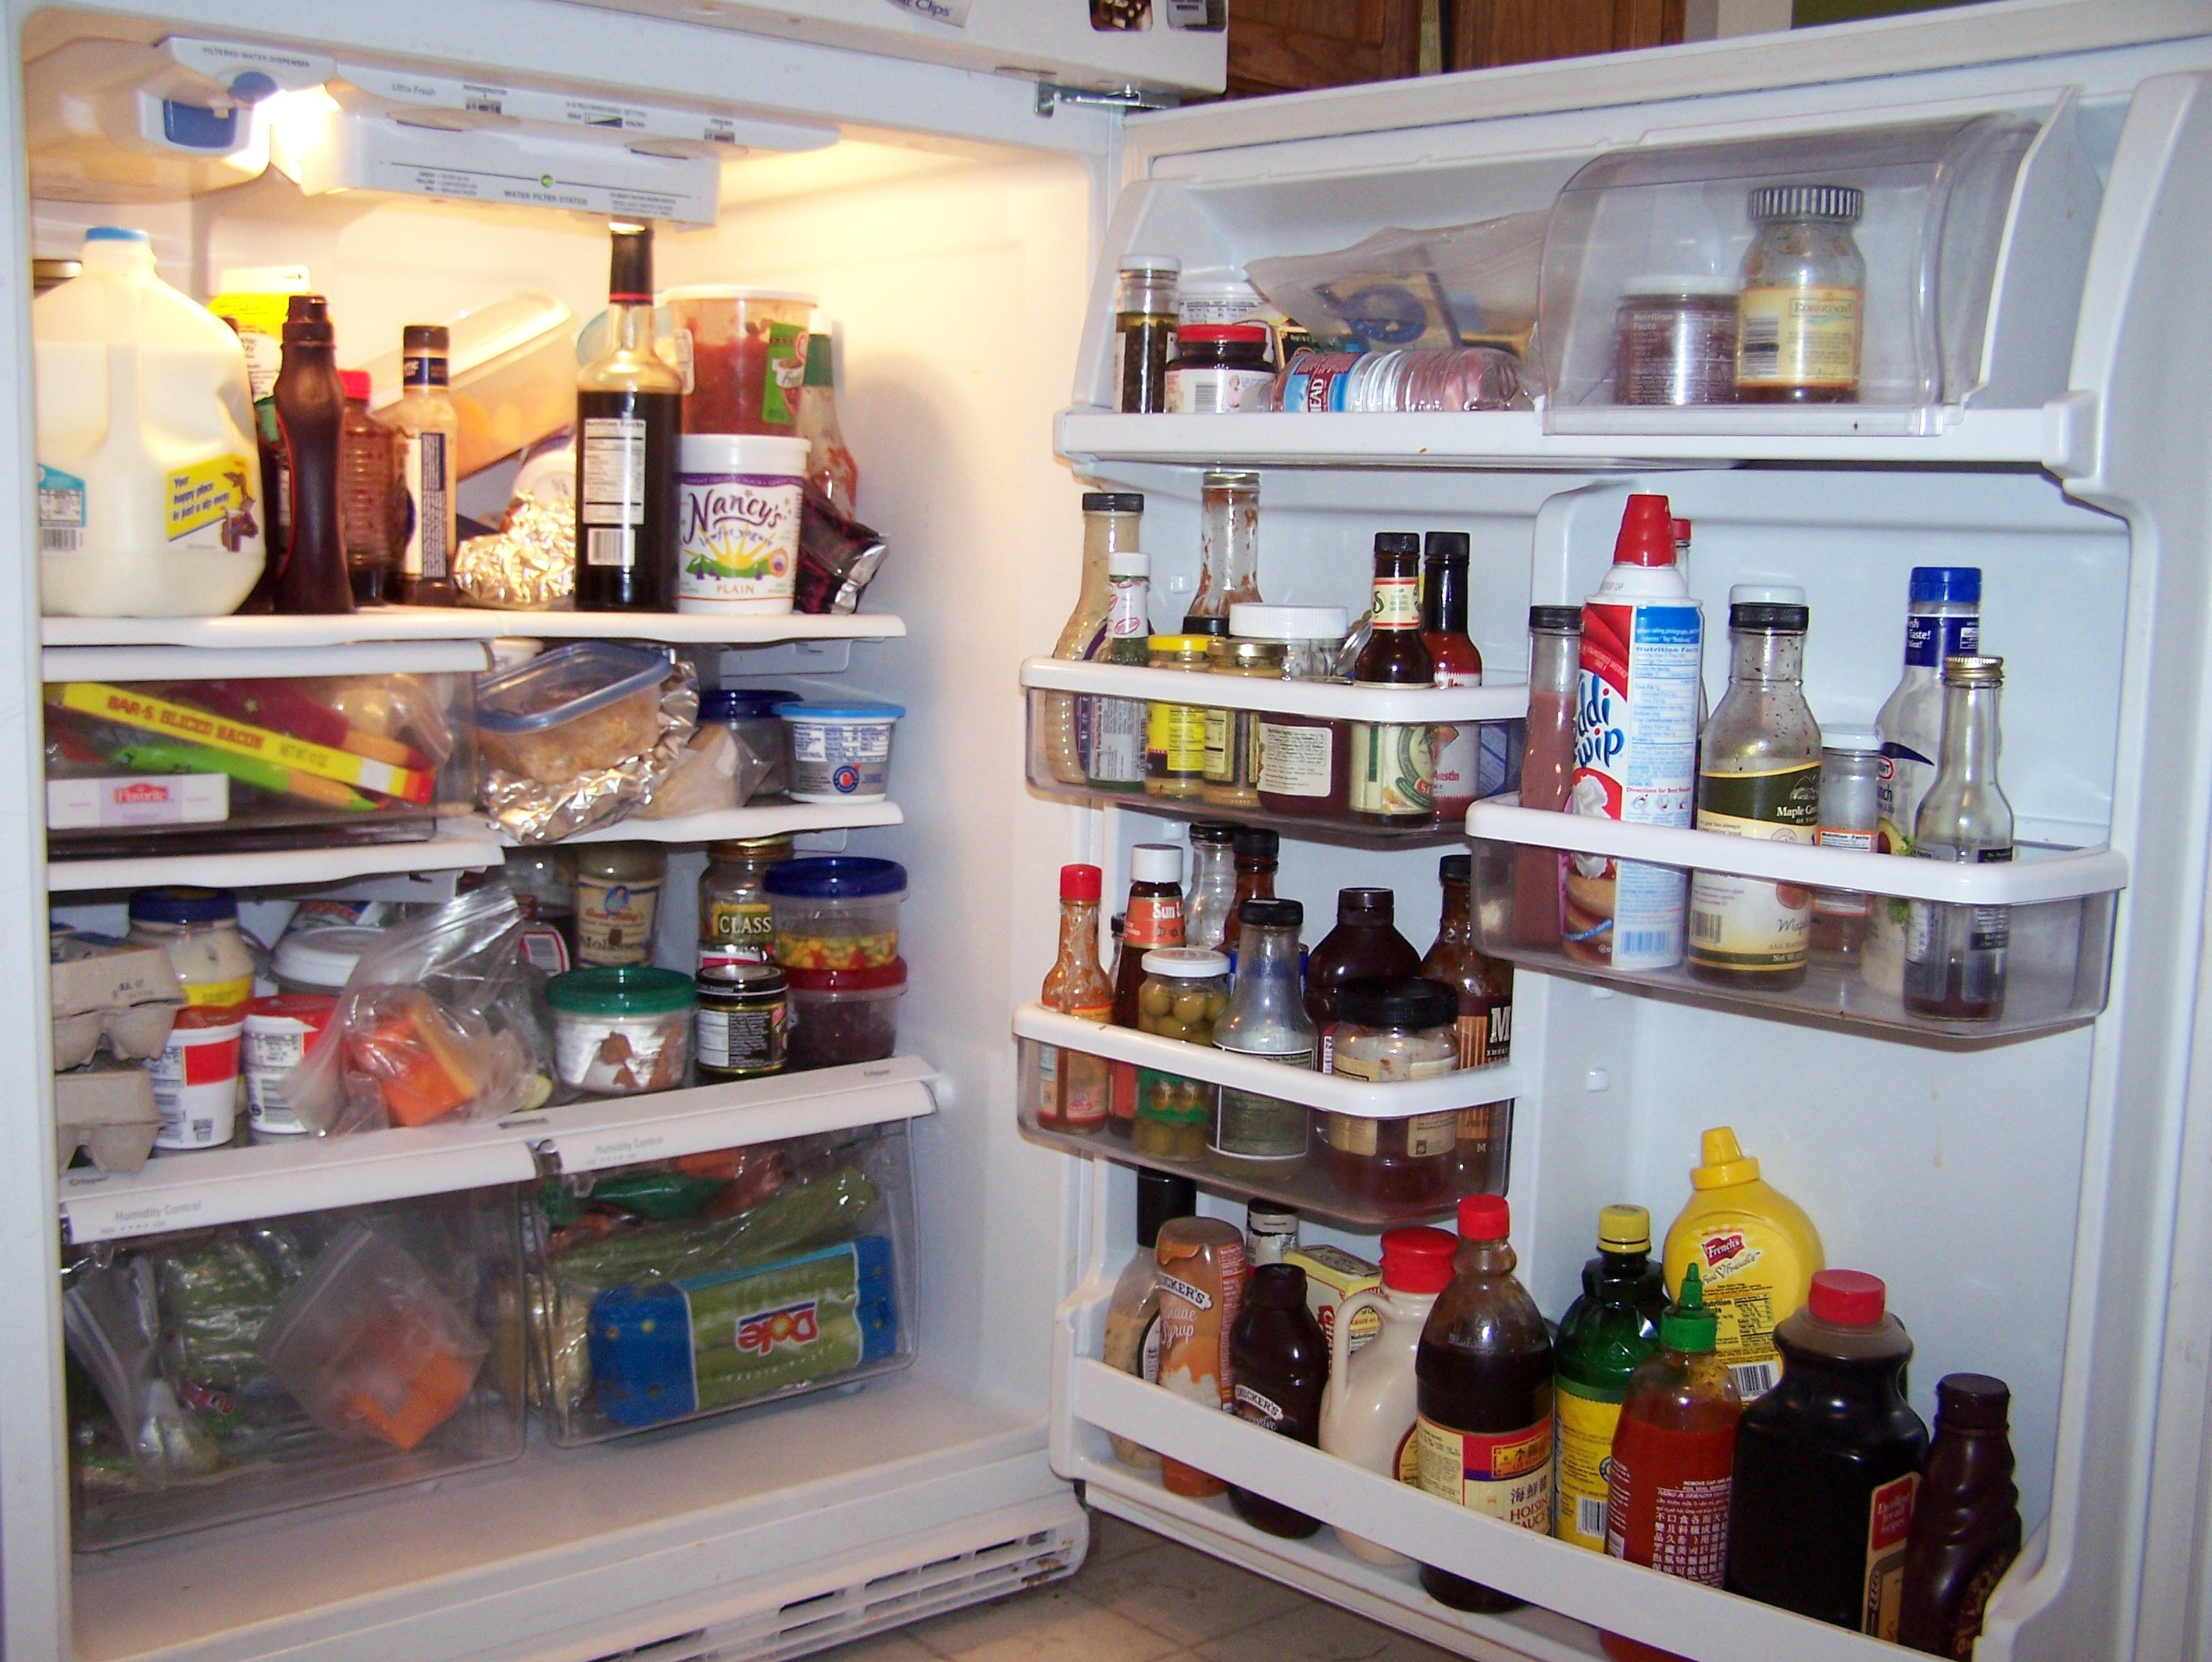 Refrigerator, Fridge, Refrigerator myths, Fridge temperature, Things never place in refrigerators, Bread, Tomatoes, Eggplant, Honey, Peanut butter, Ketchup, Oranges, Health news, Offbeat news